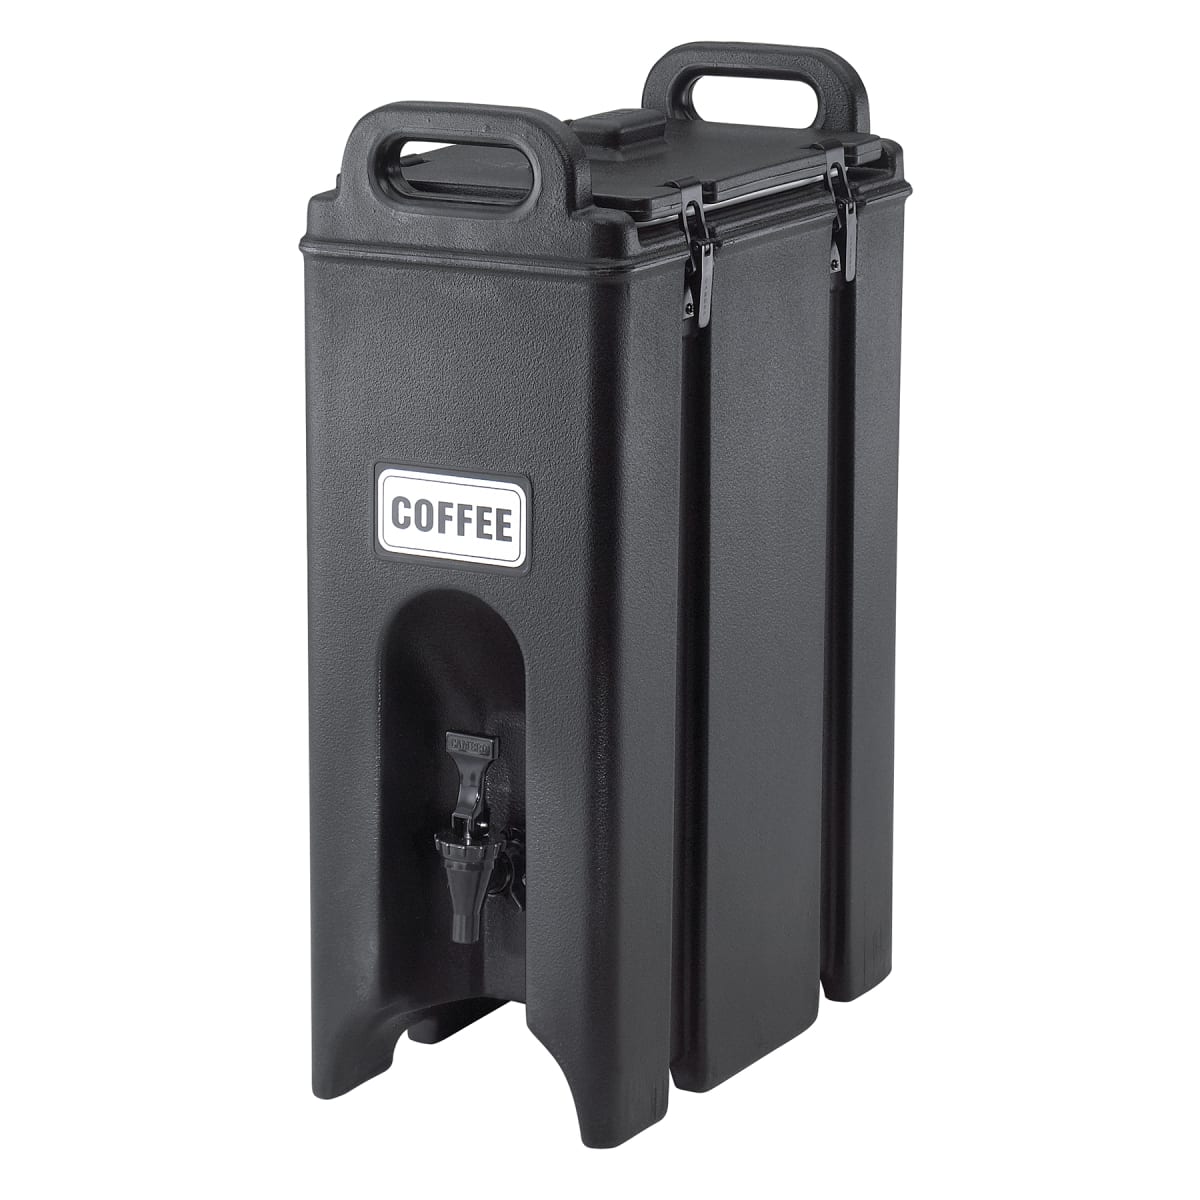 Cambro Camtainer 2.5 Gallon Capacity Coffee Beige